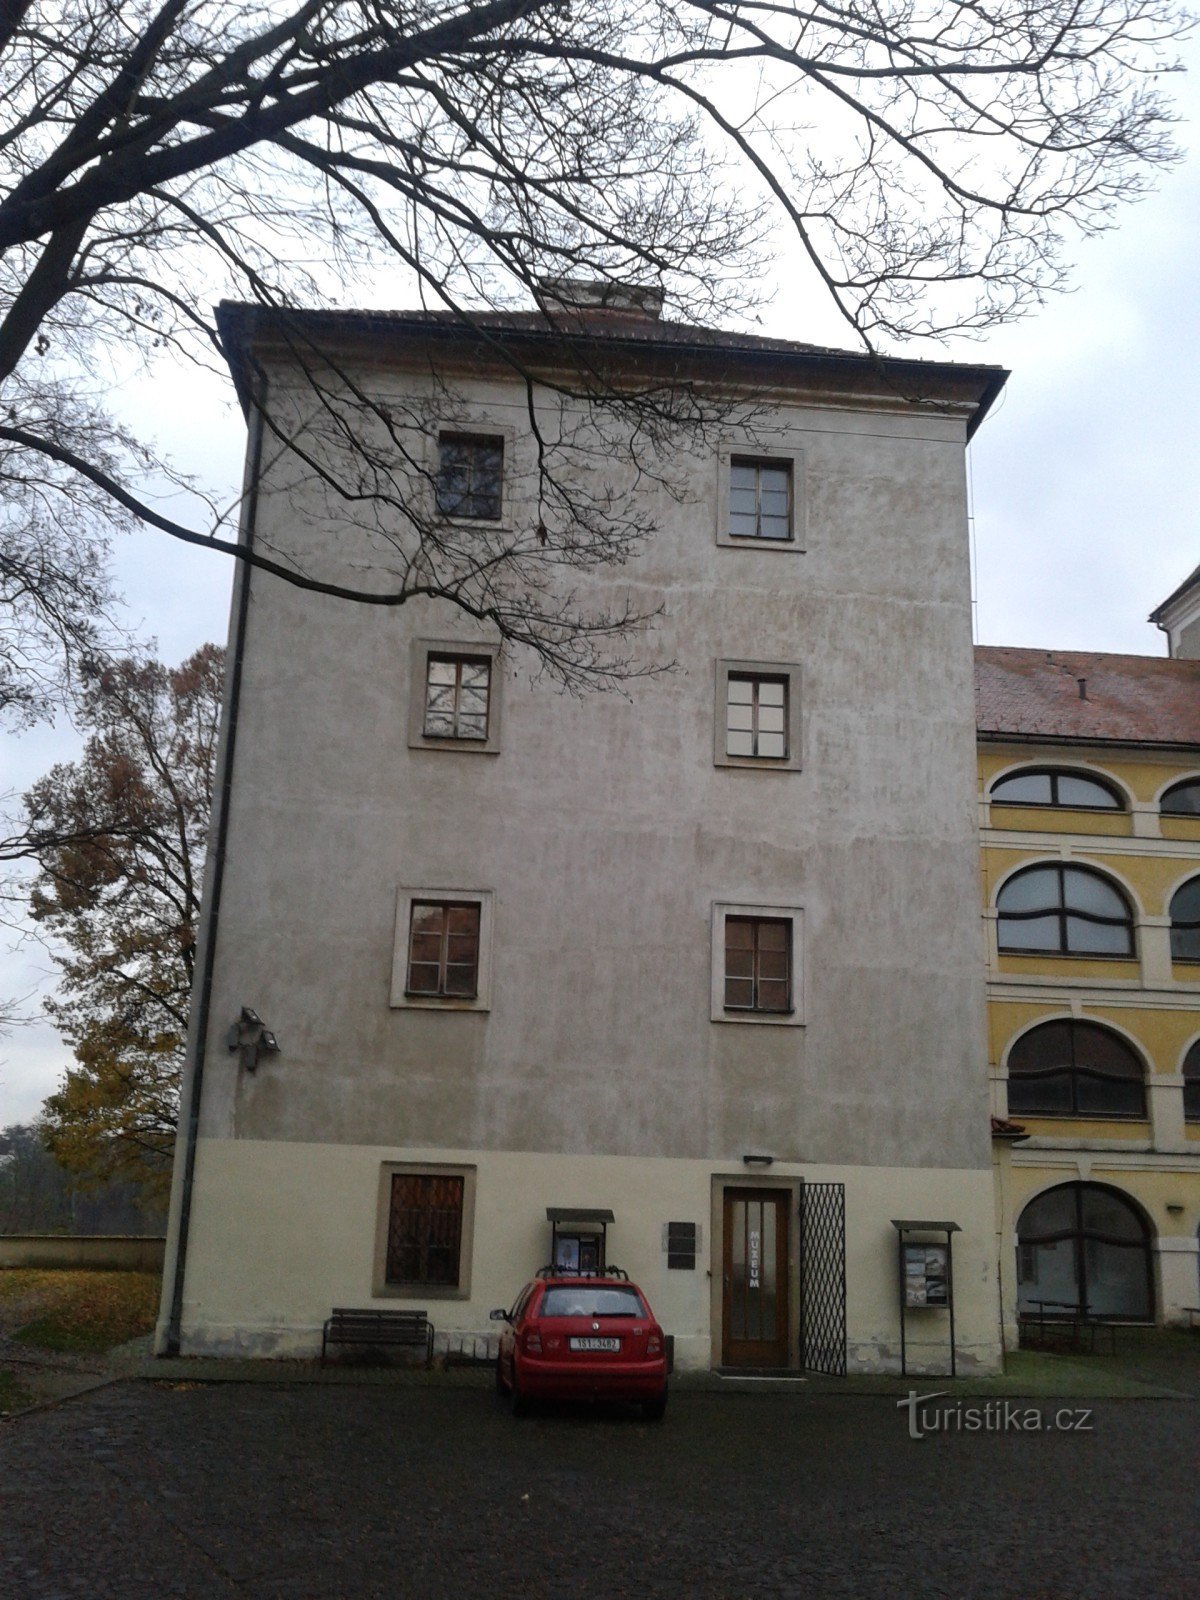 Mladá Boleslav kastély